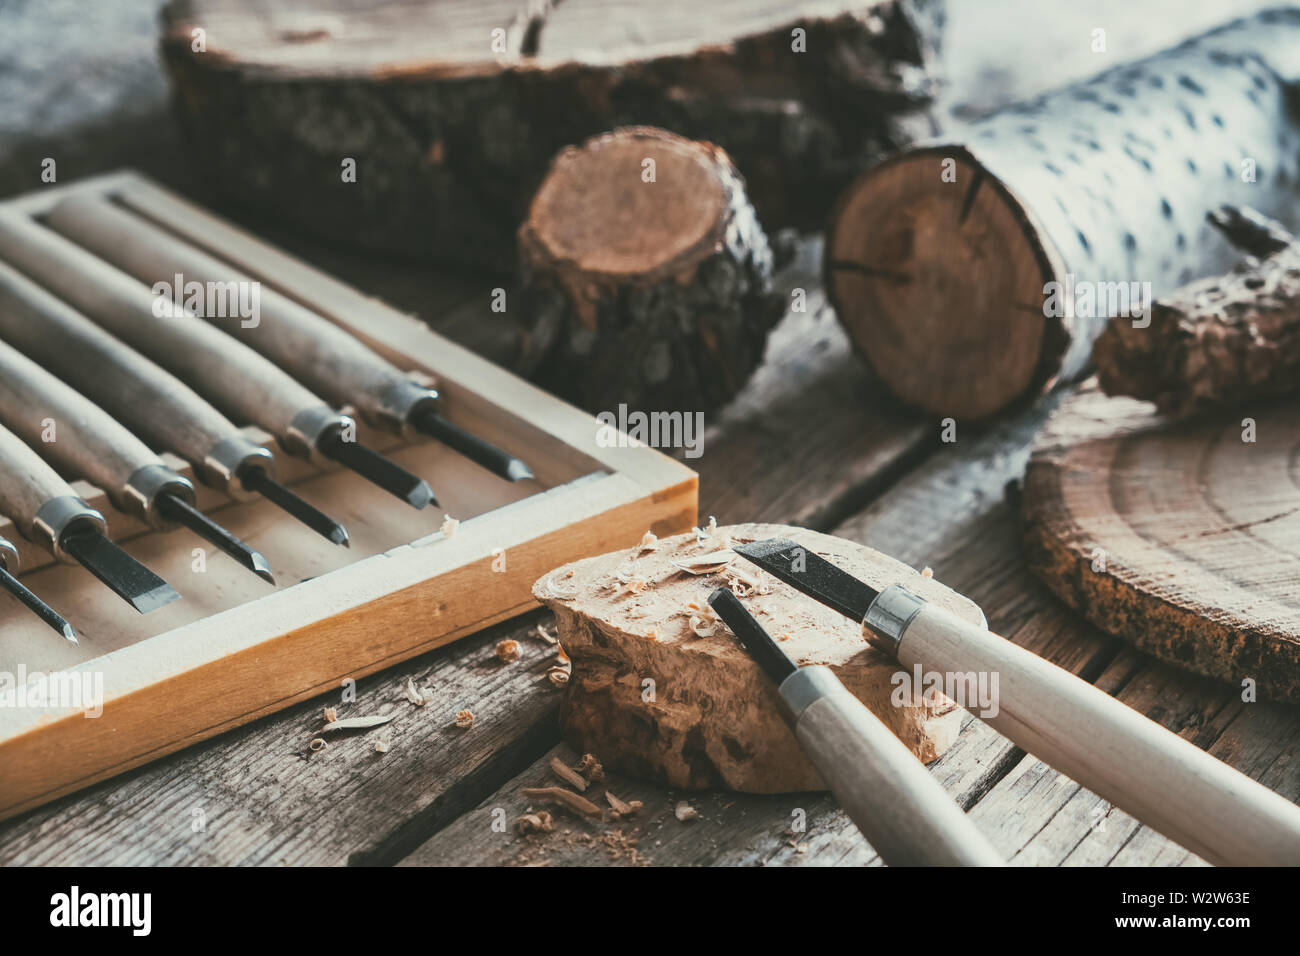 Set wood carving tools on immagini e fotografie stock ad alta risoluzione -  Alamy